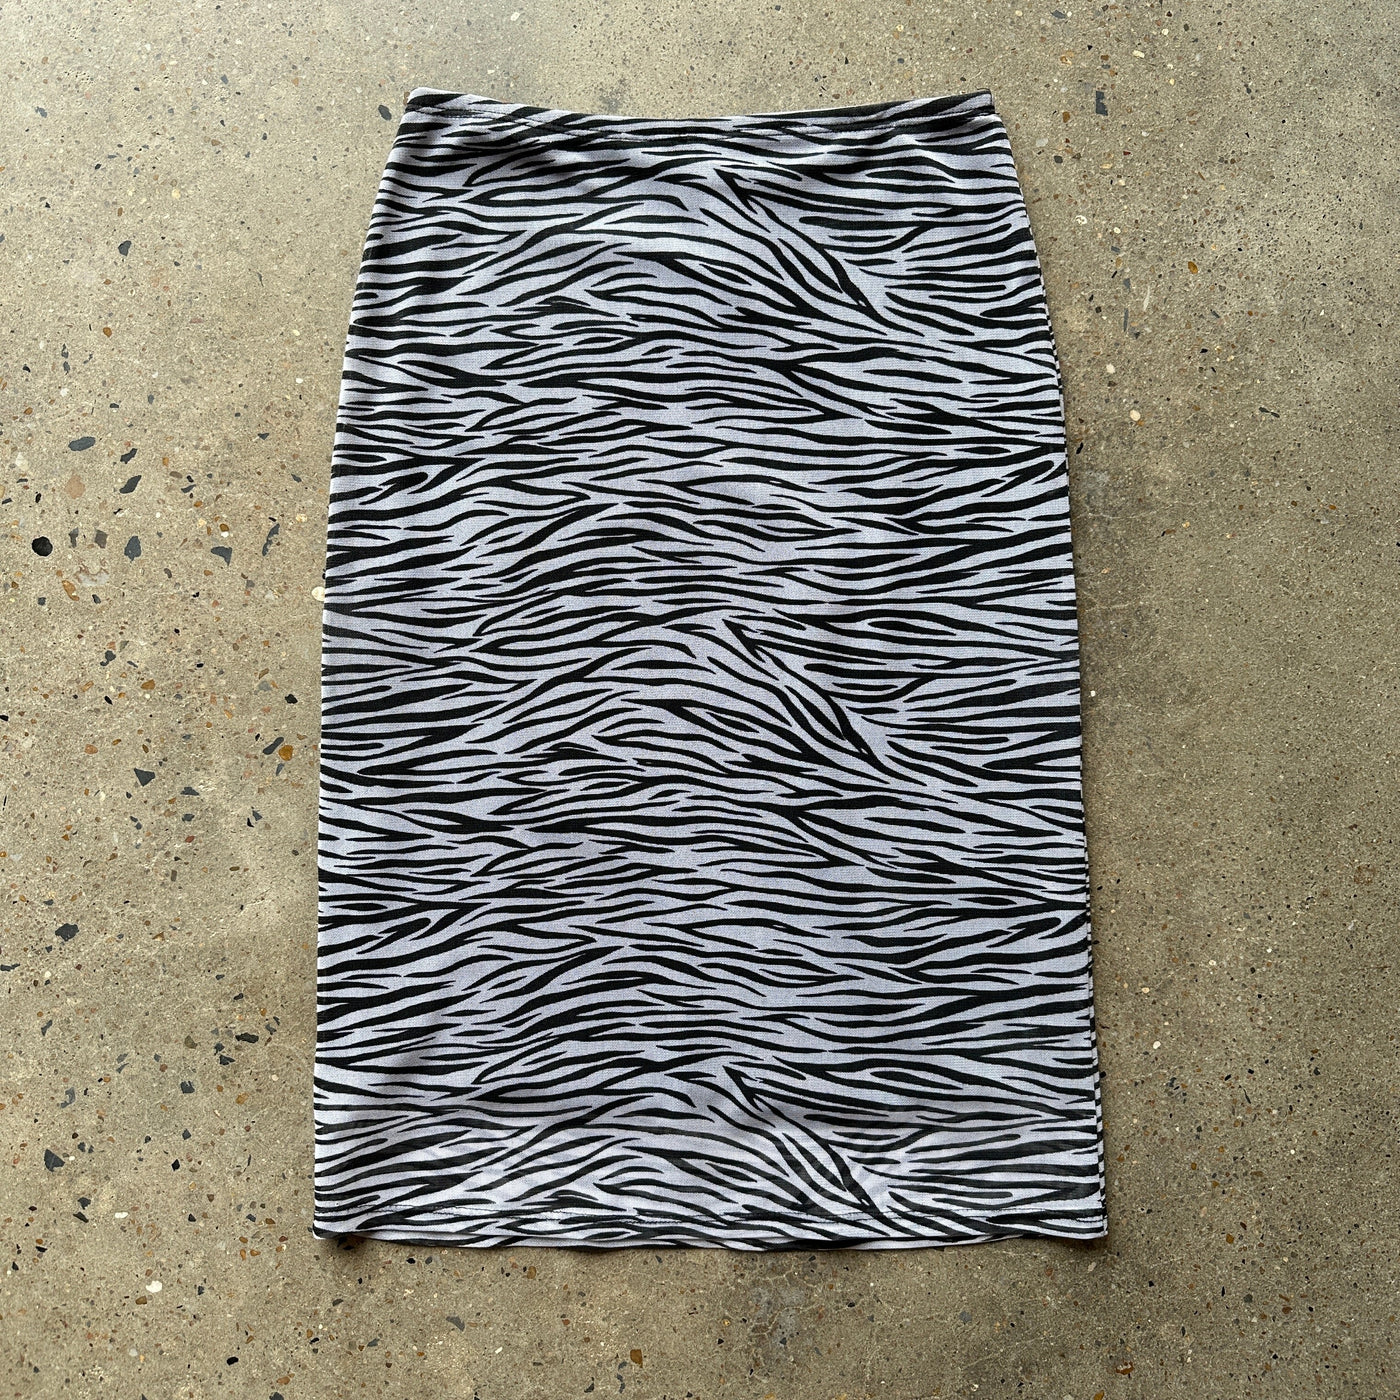 90s Zebra Print “A’gaci Too” Skirt